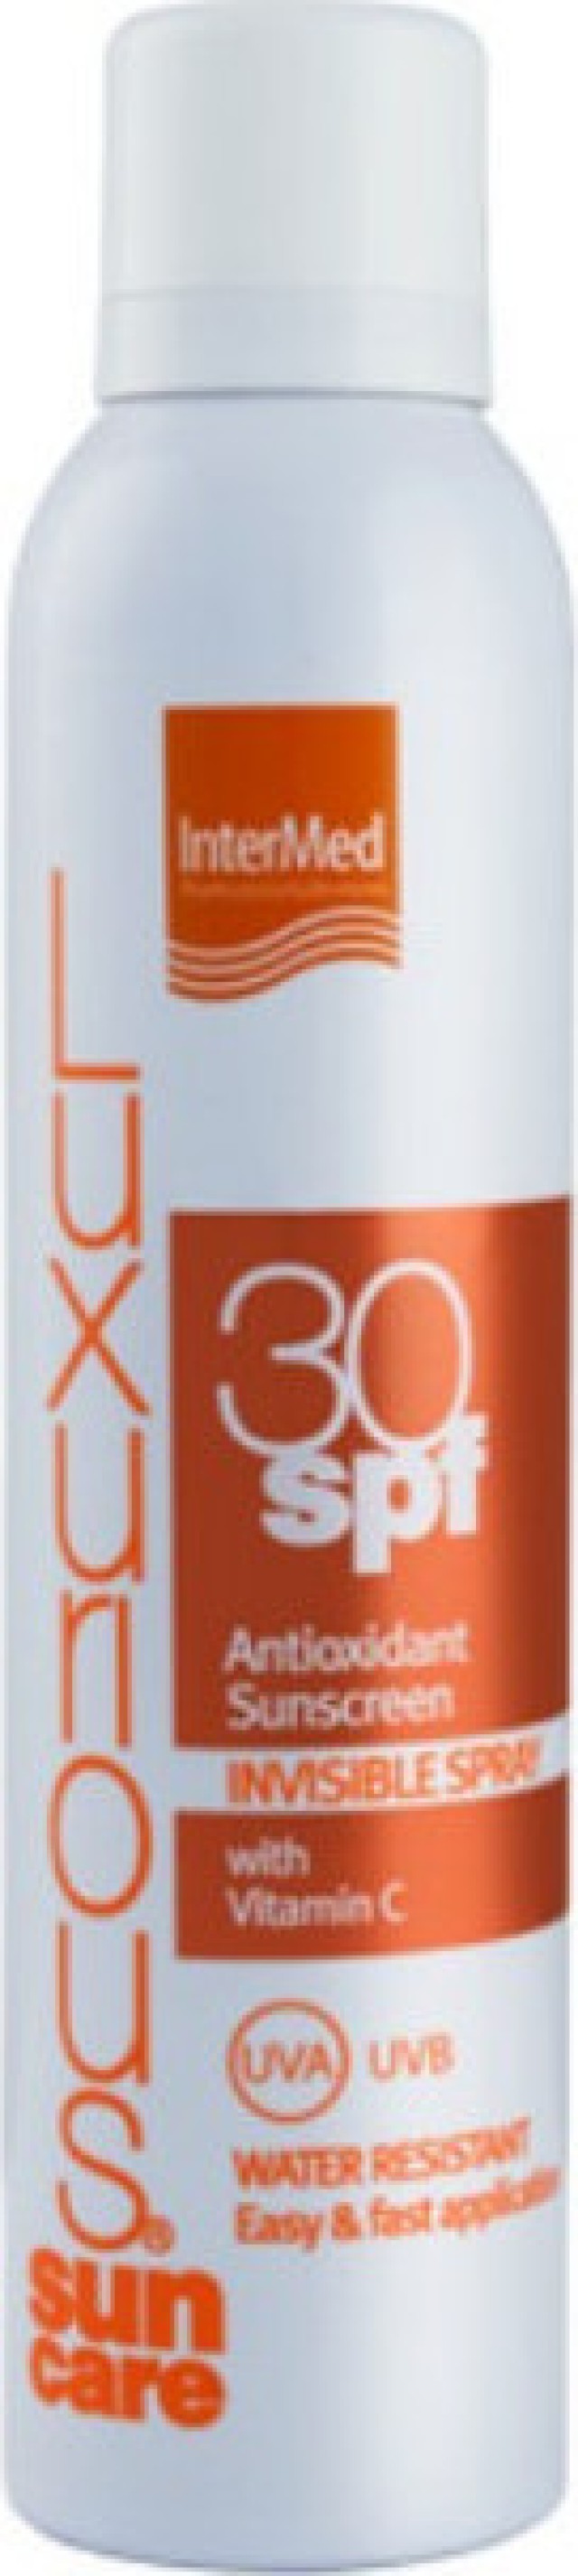 Intermed Luxurious Sunscreen Invisible SPF30 Body Spray Αντιηλιακή Προστασία 200ml